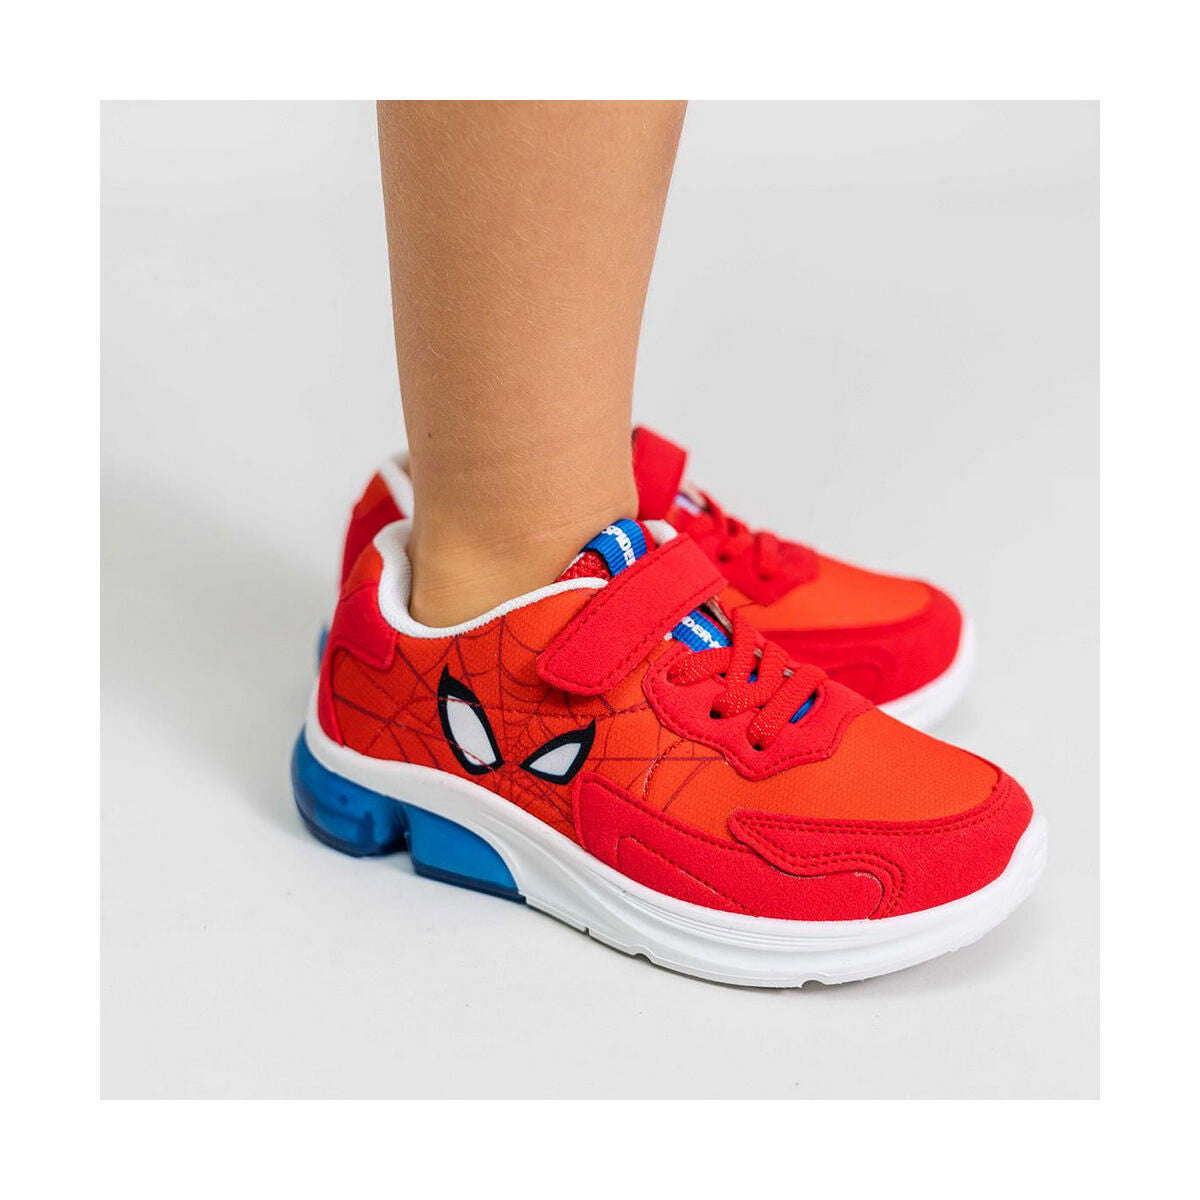 Sportschoenen met LED Spider-Man